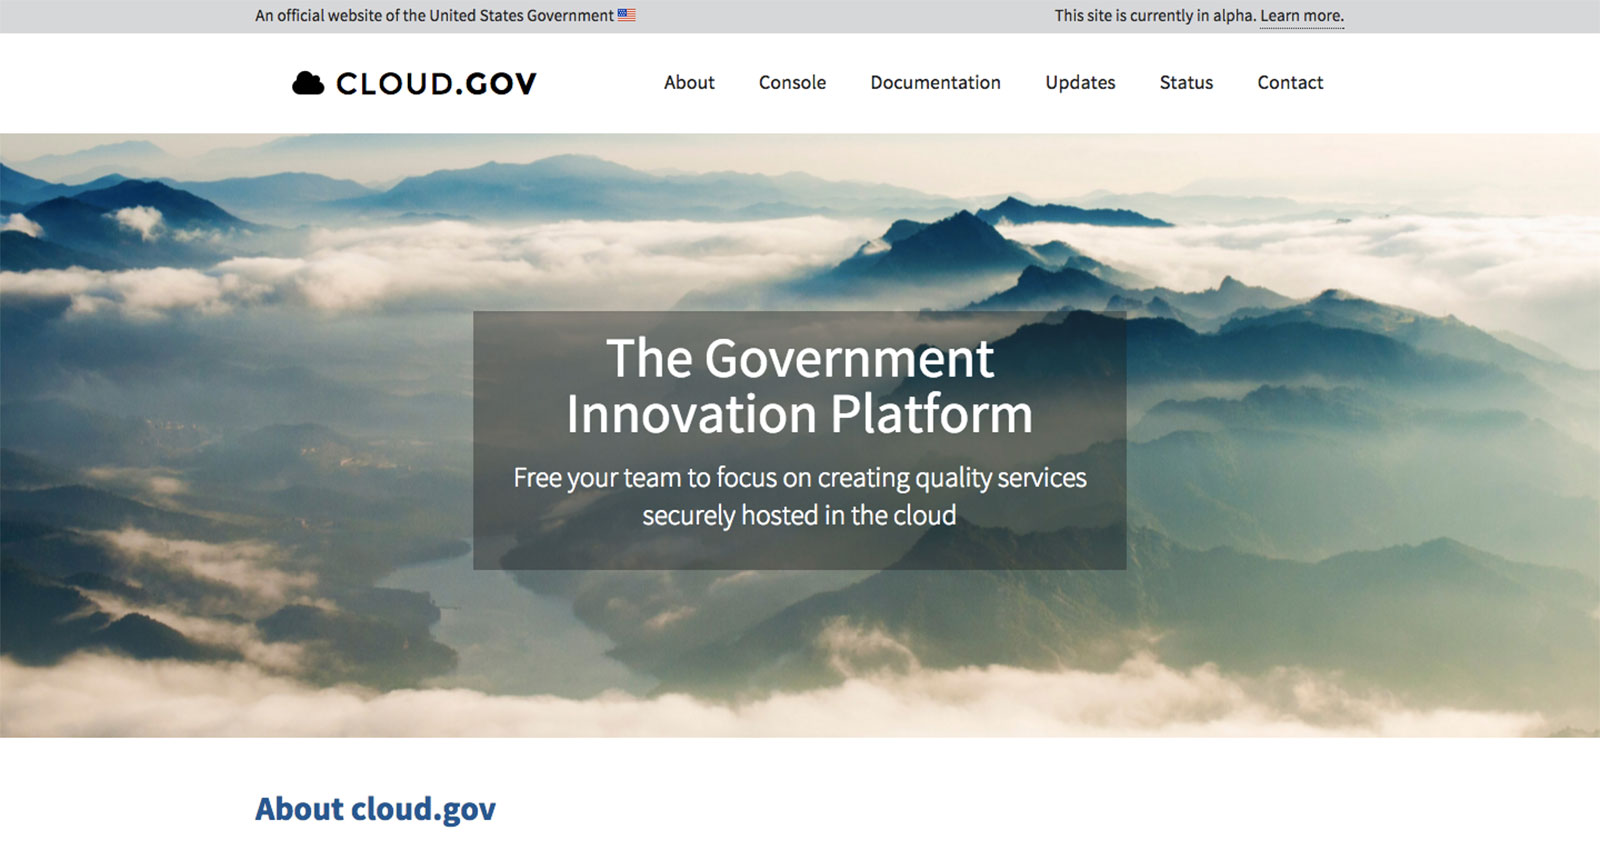 The cloud.gov homepage